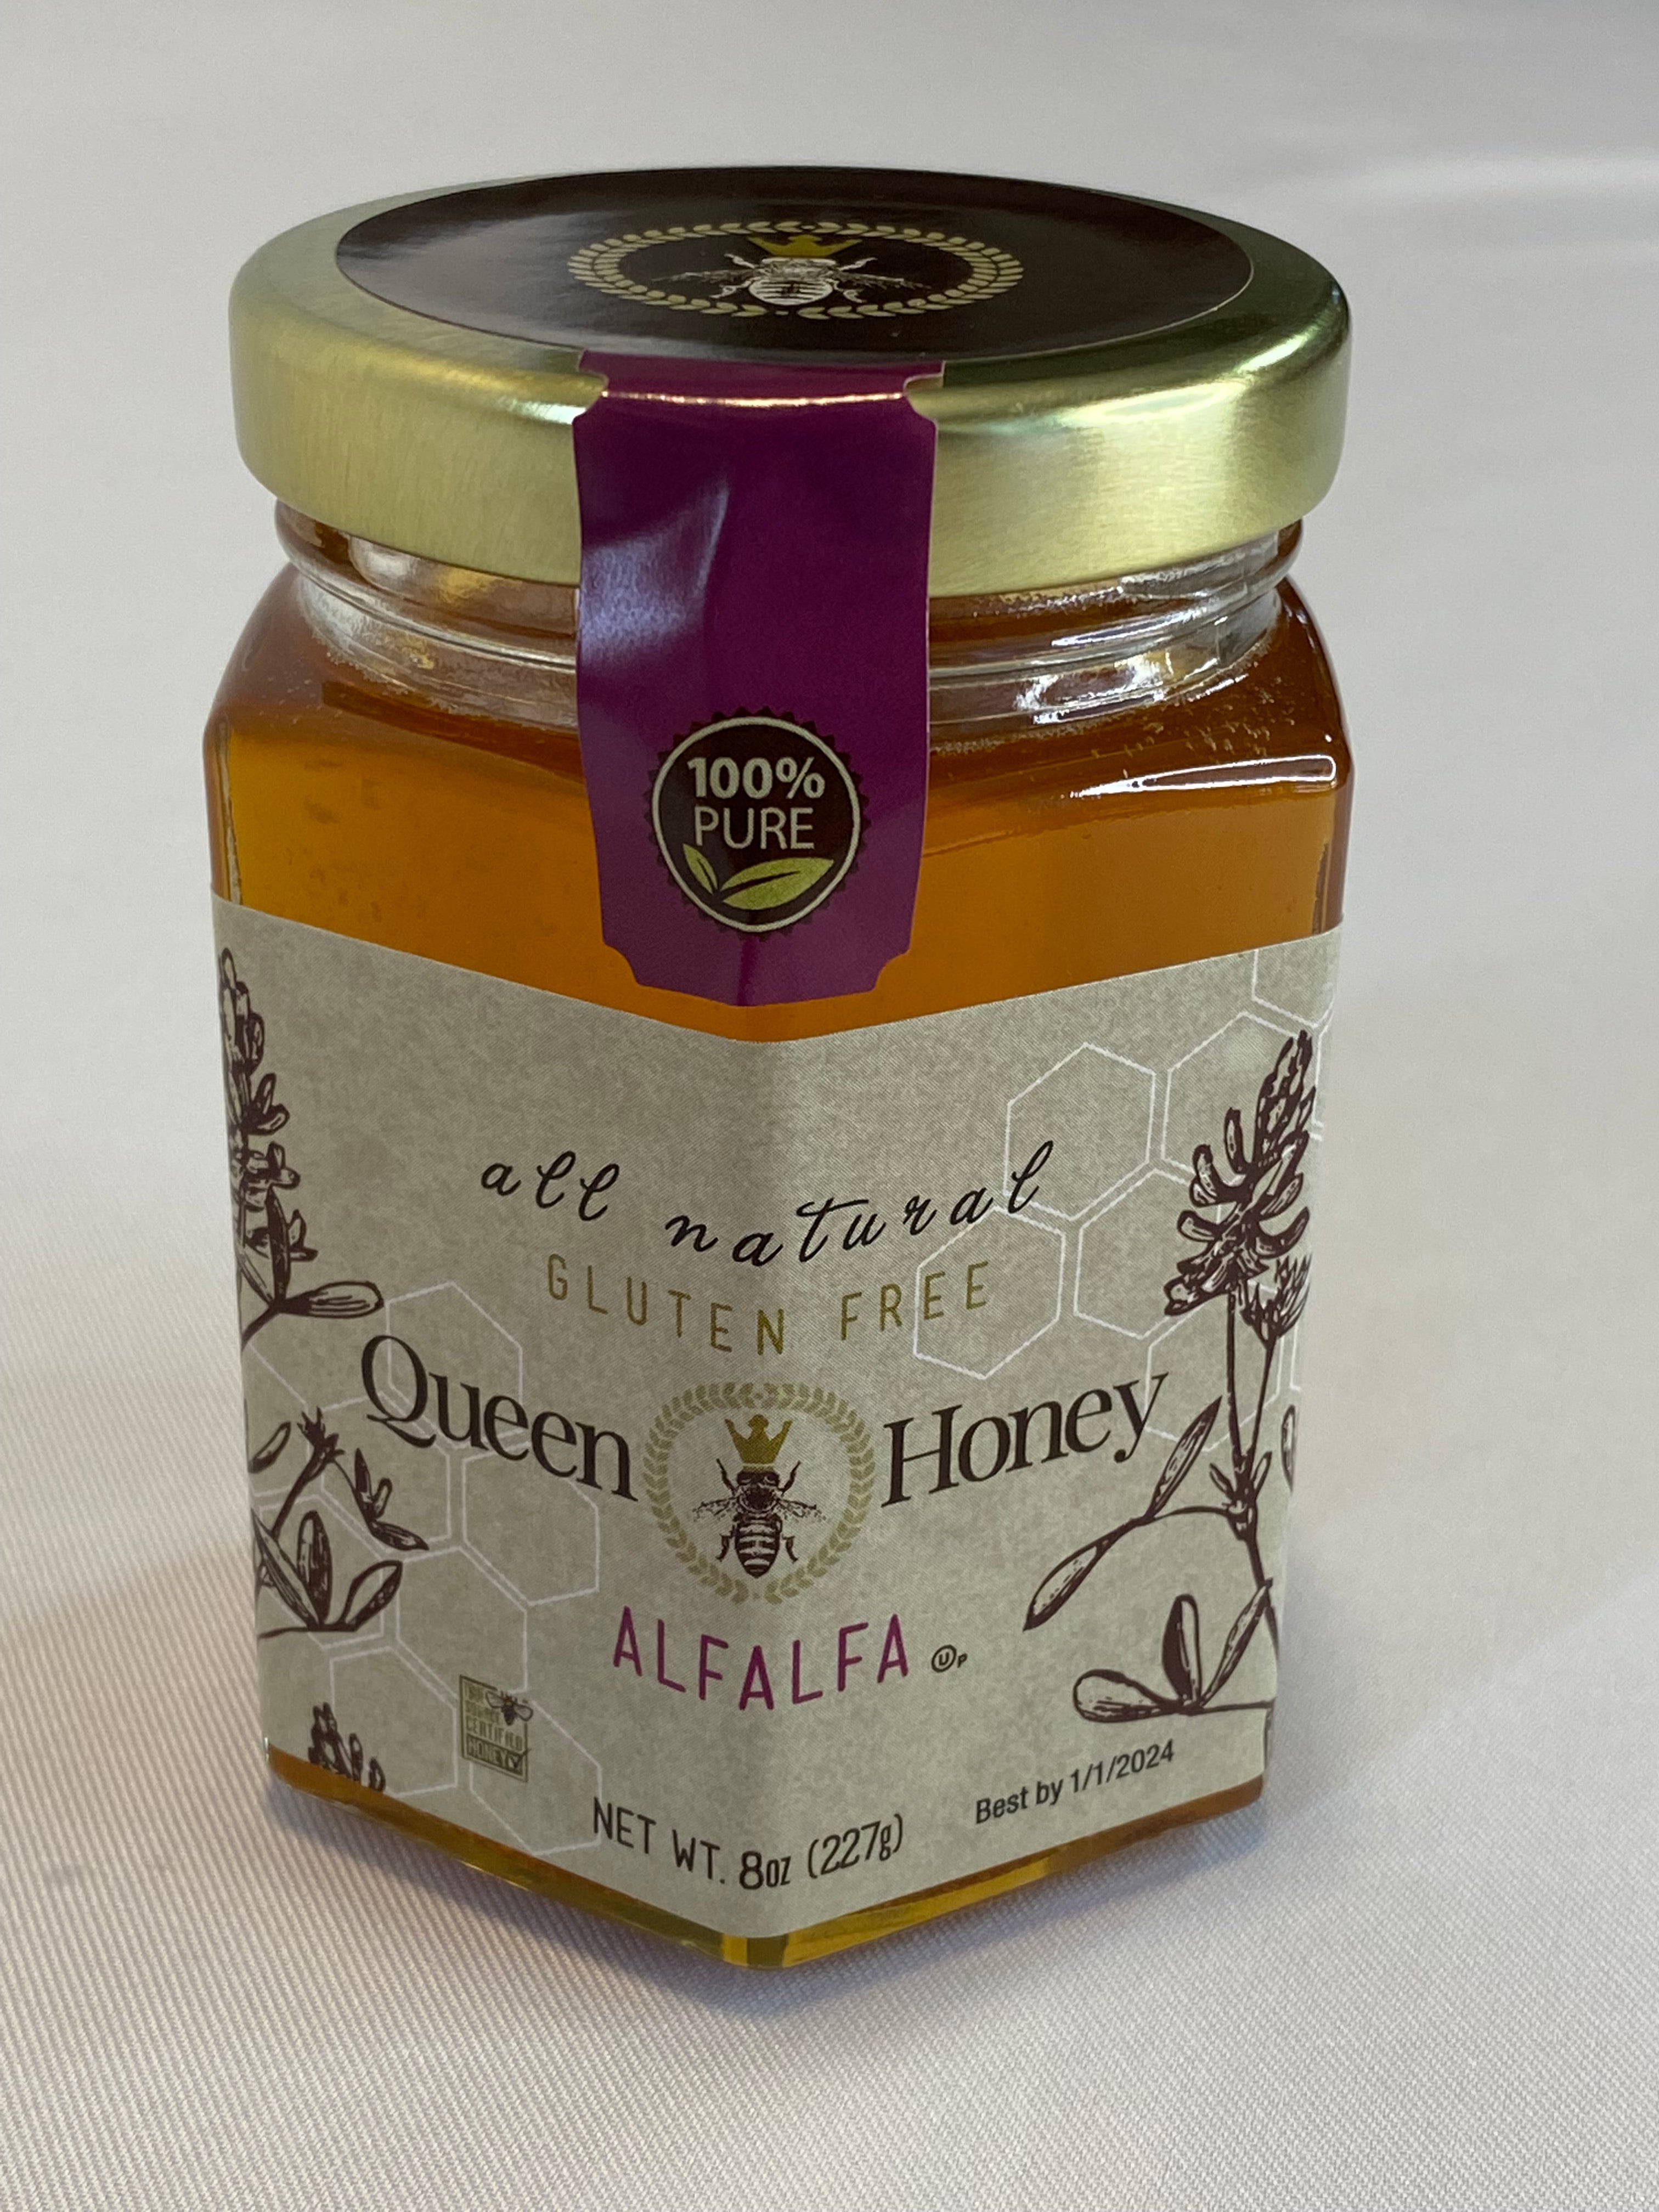 All Natural Alfalfa Honey